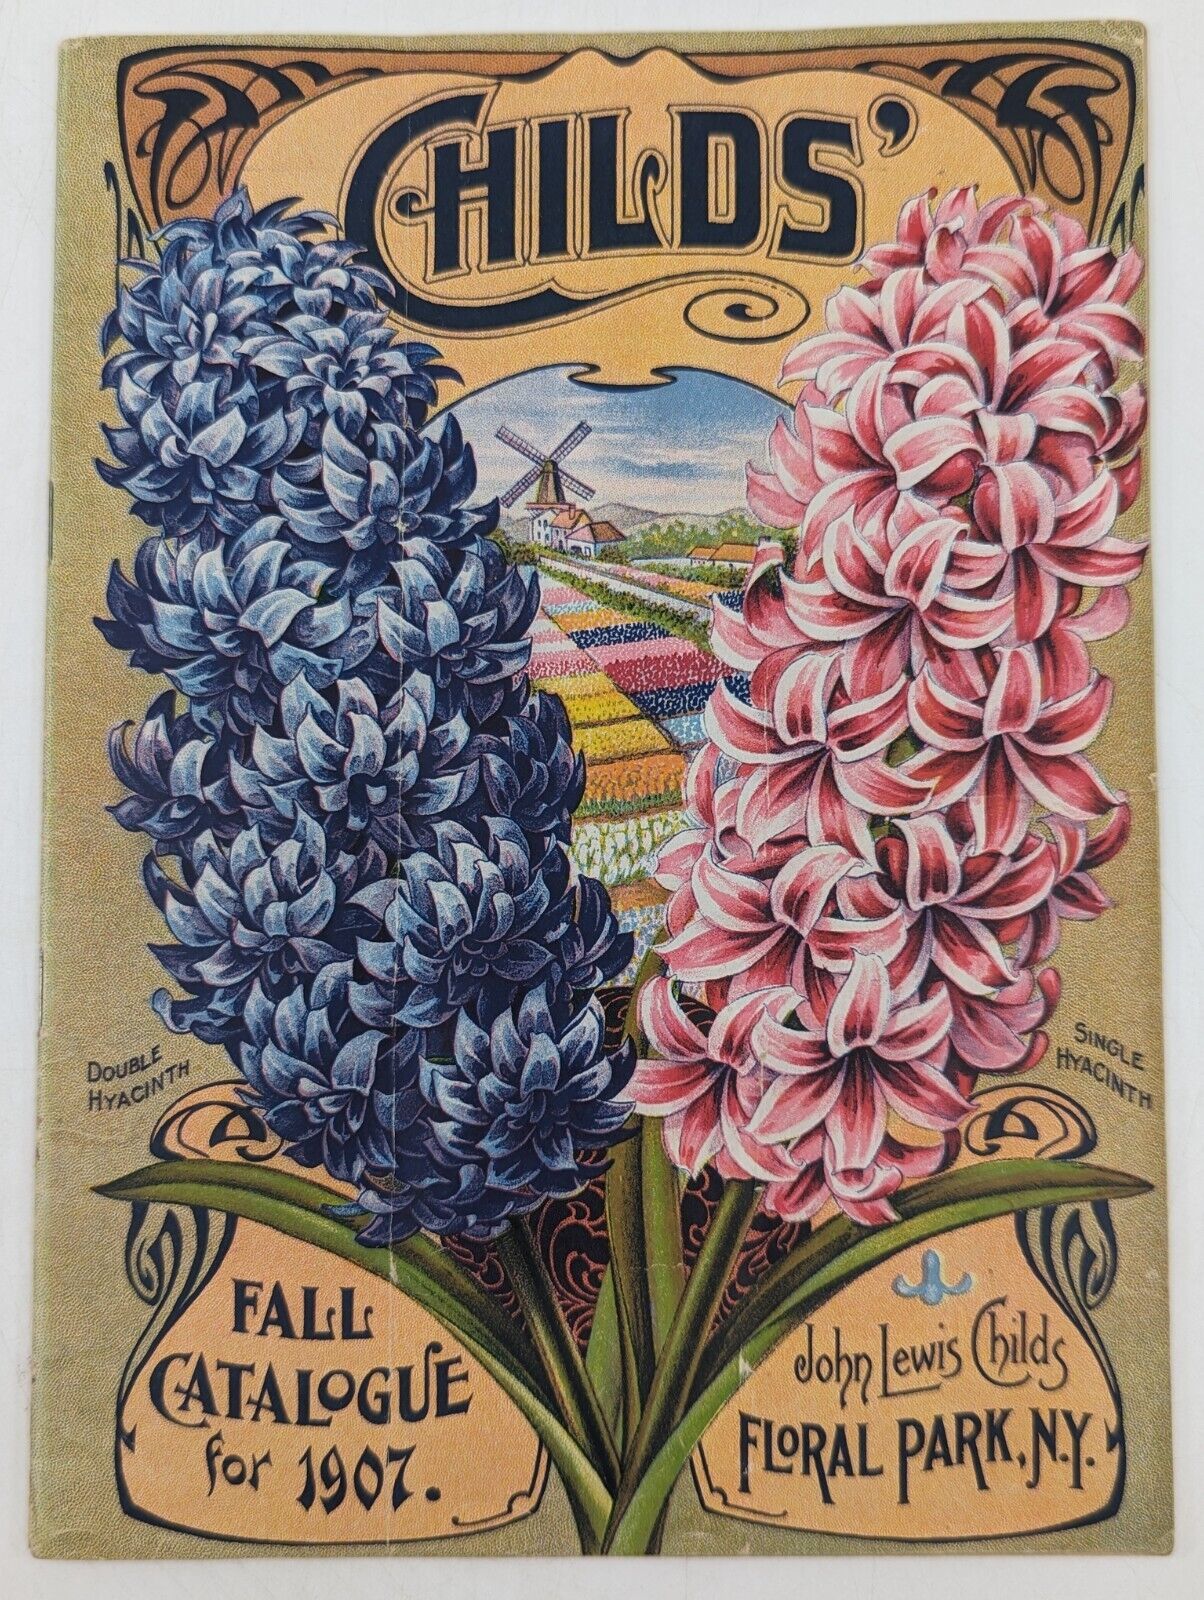 1907 CHILDS' Fall Catalogue (Vintage Orig.) John Lewis Childs - Floral Park, NY